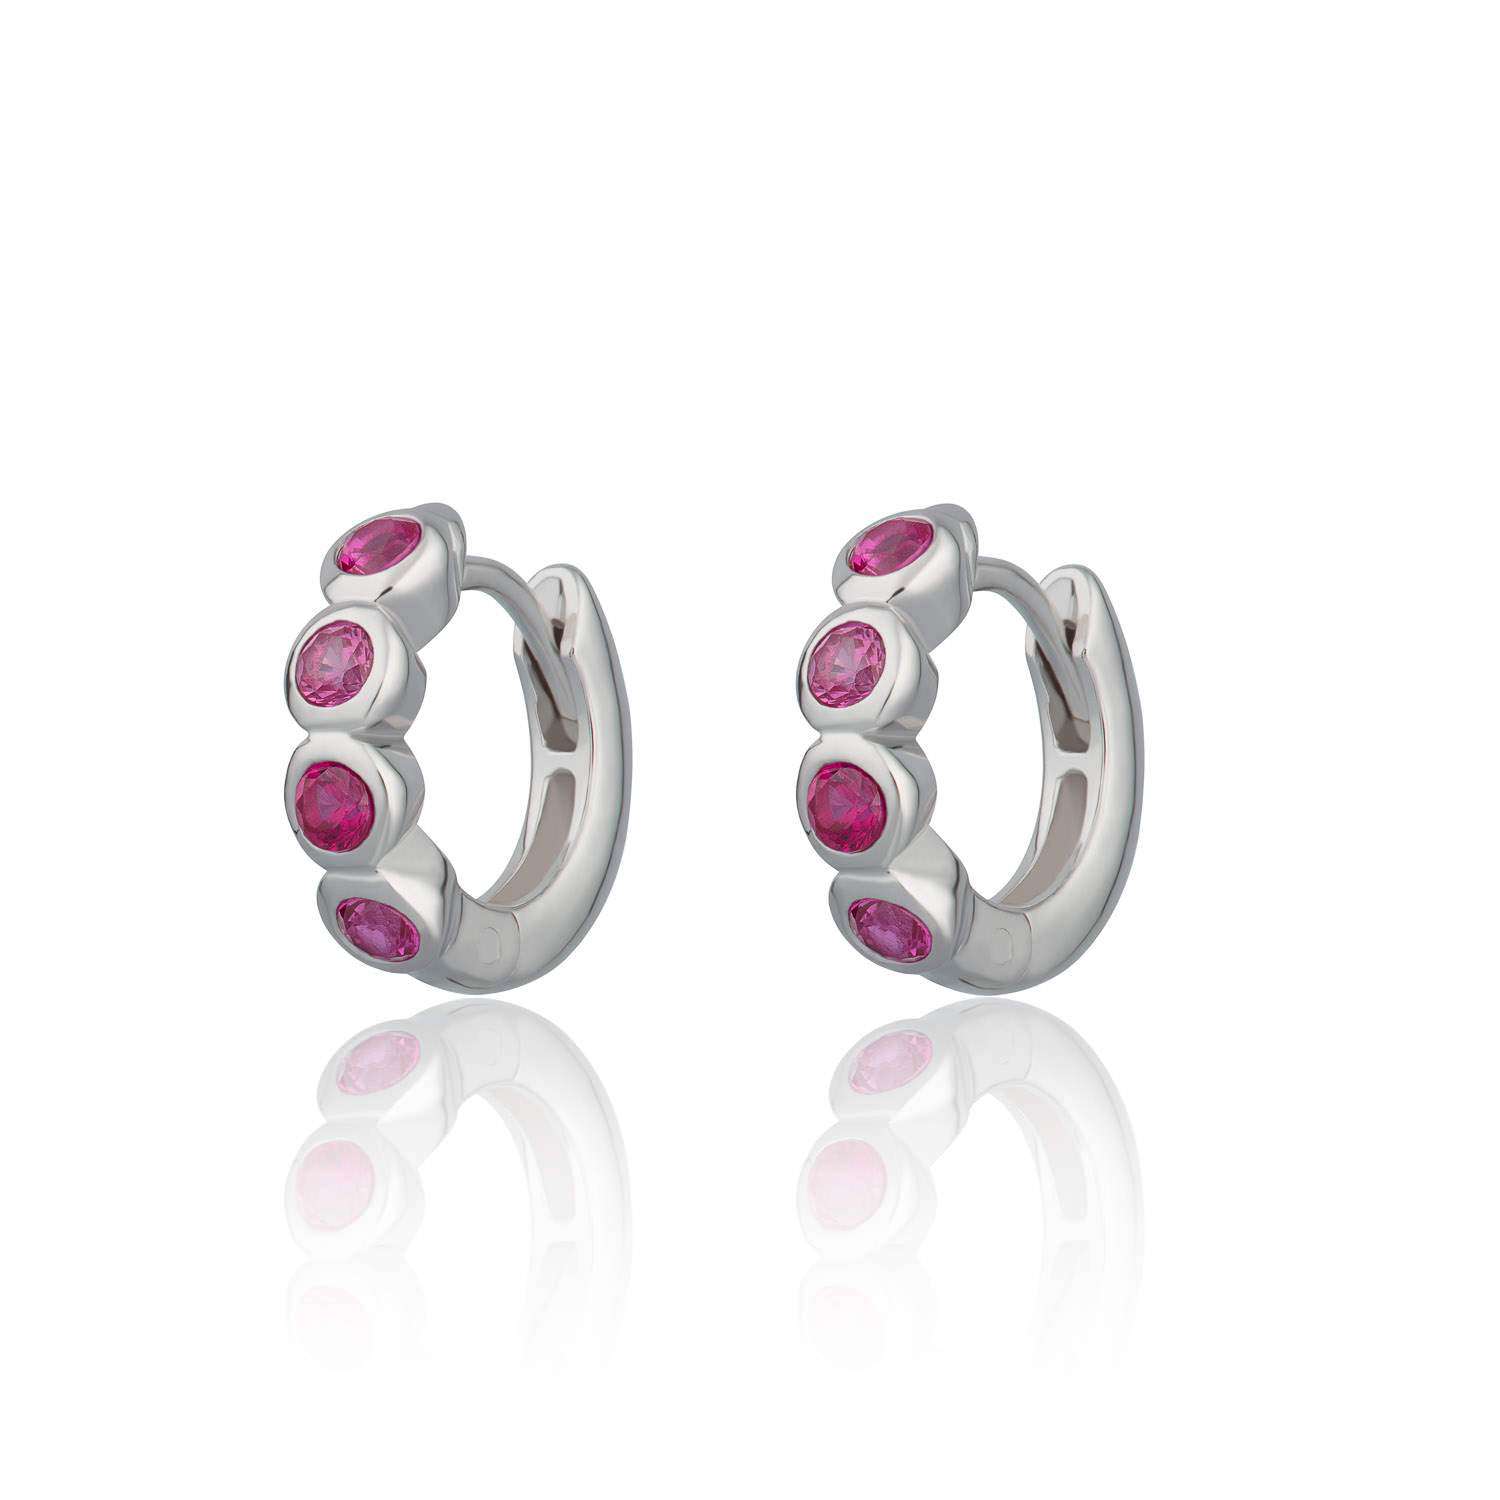 Bezel Huggie Earrings with Ruby Pink Stones